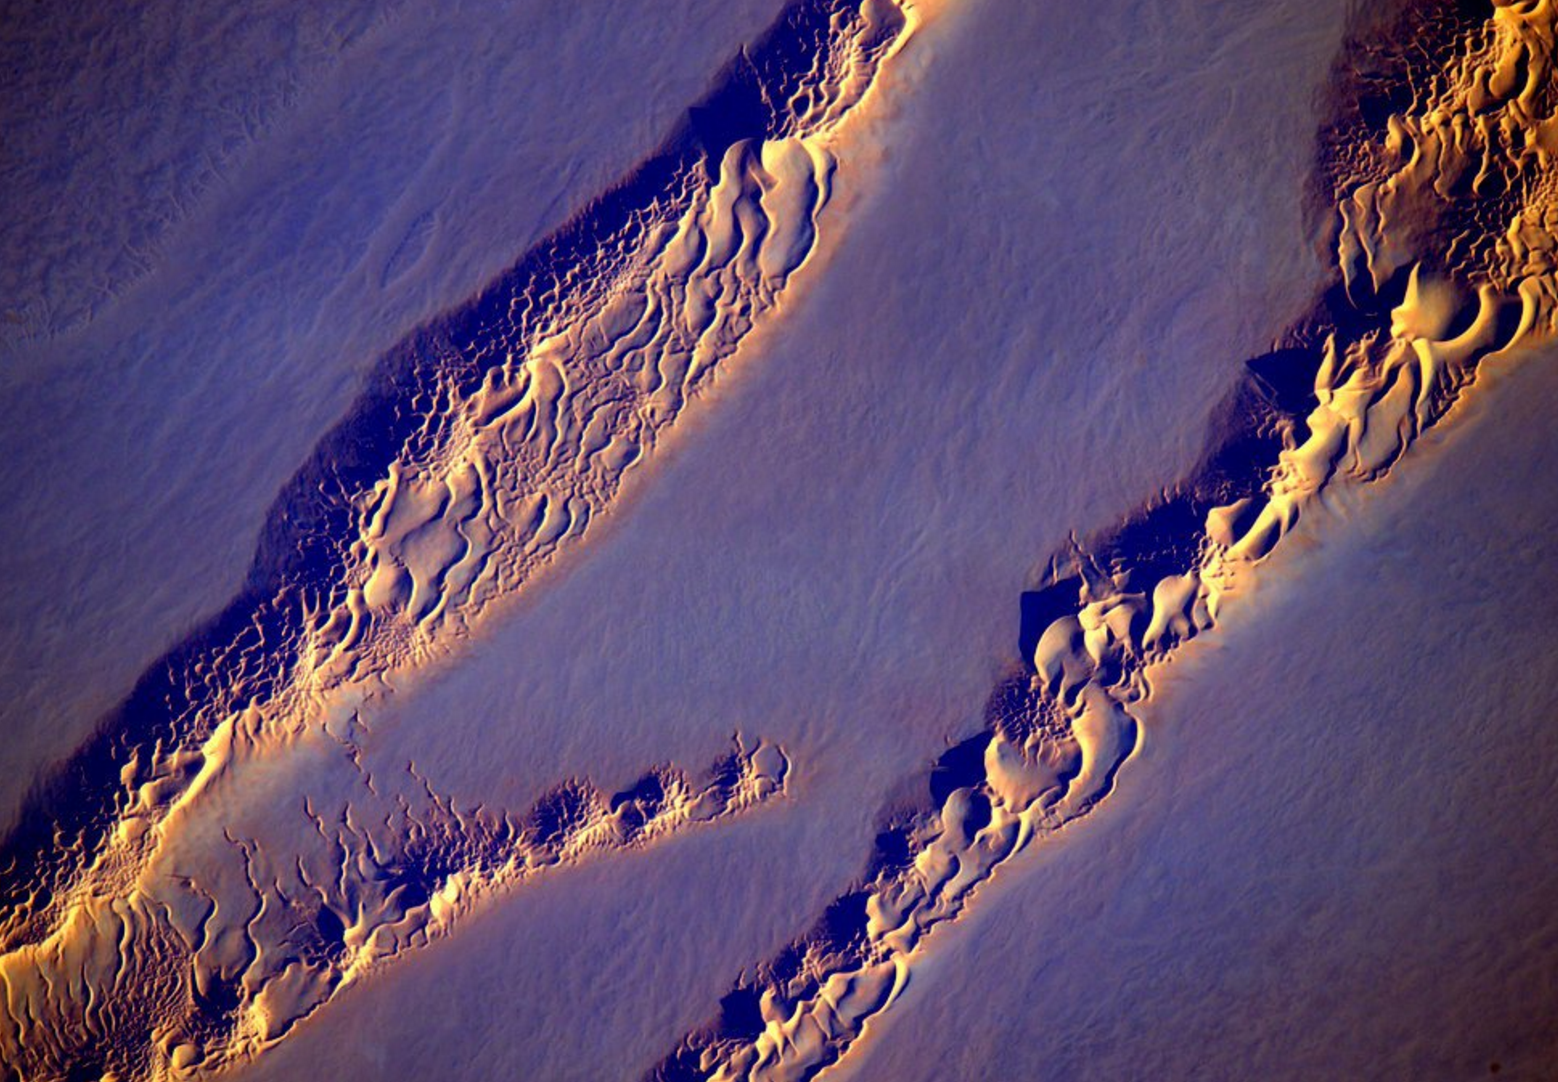 Desert Dunes from ISS by Scott Kelly